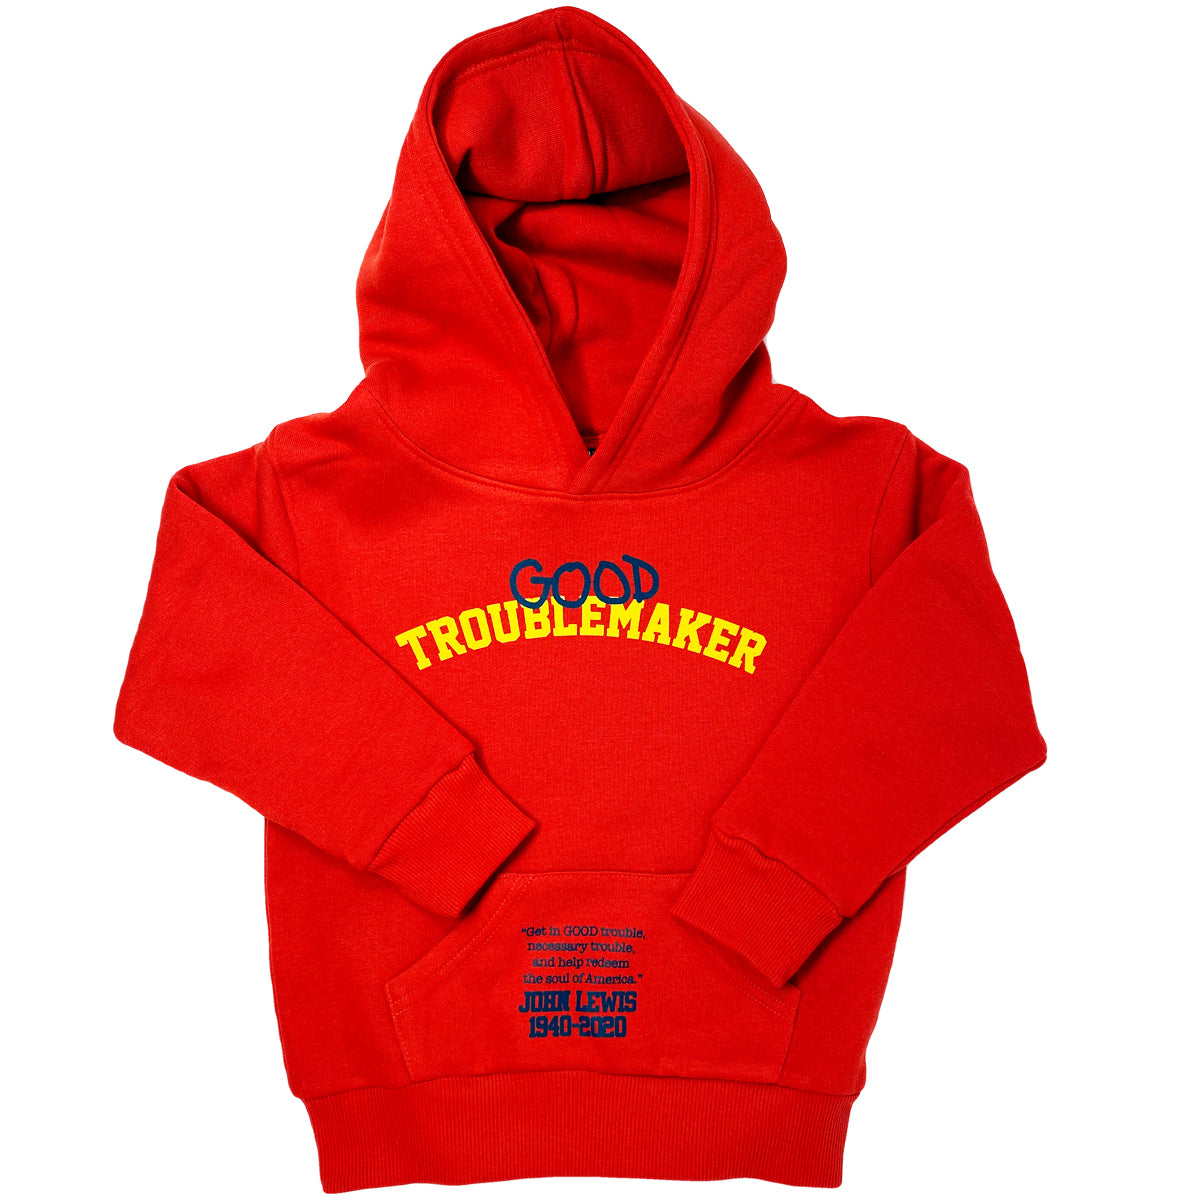 Troublemaker Hoodie (Red)